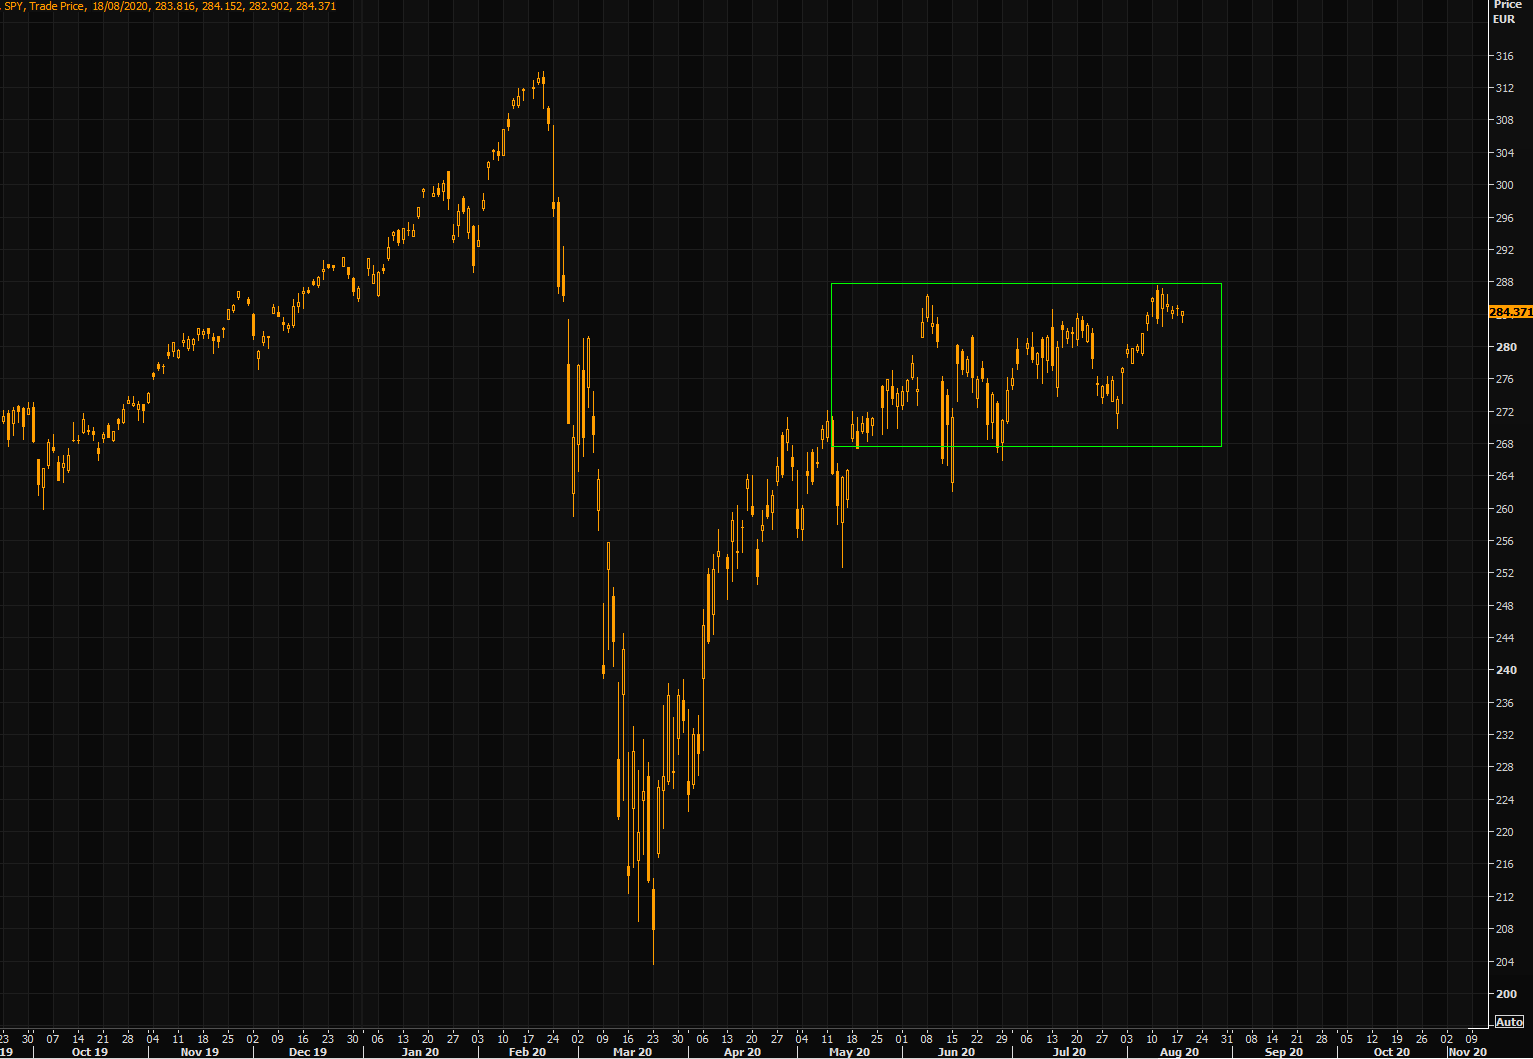 S&P - so bullish, so bullish...in USD terms